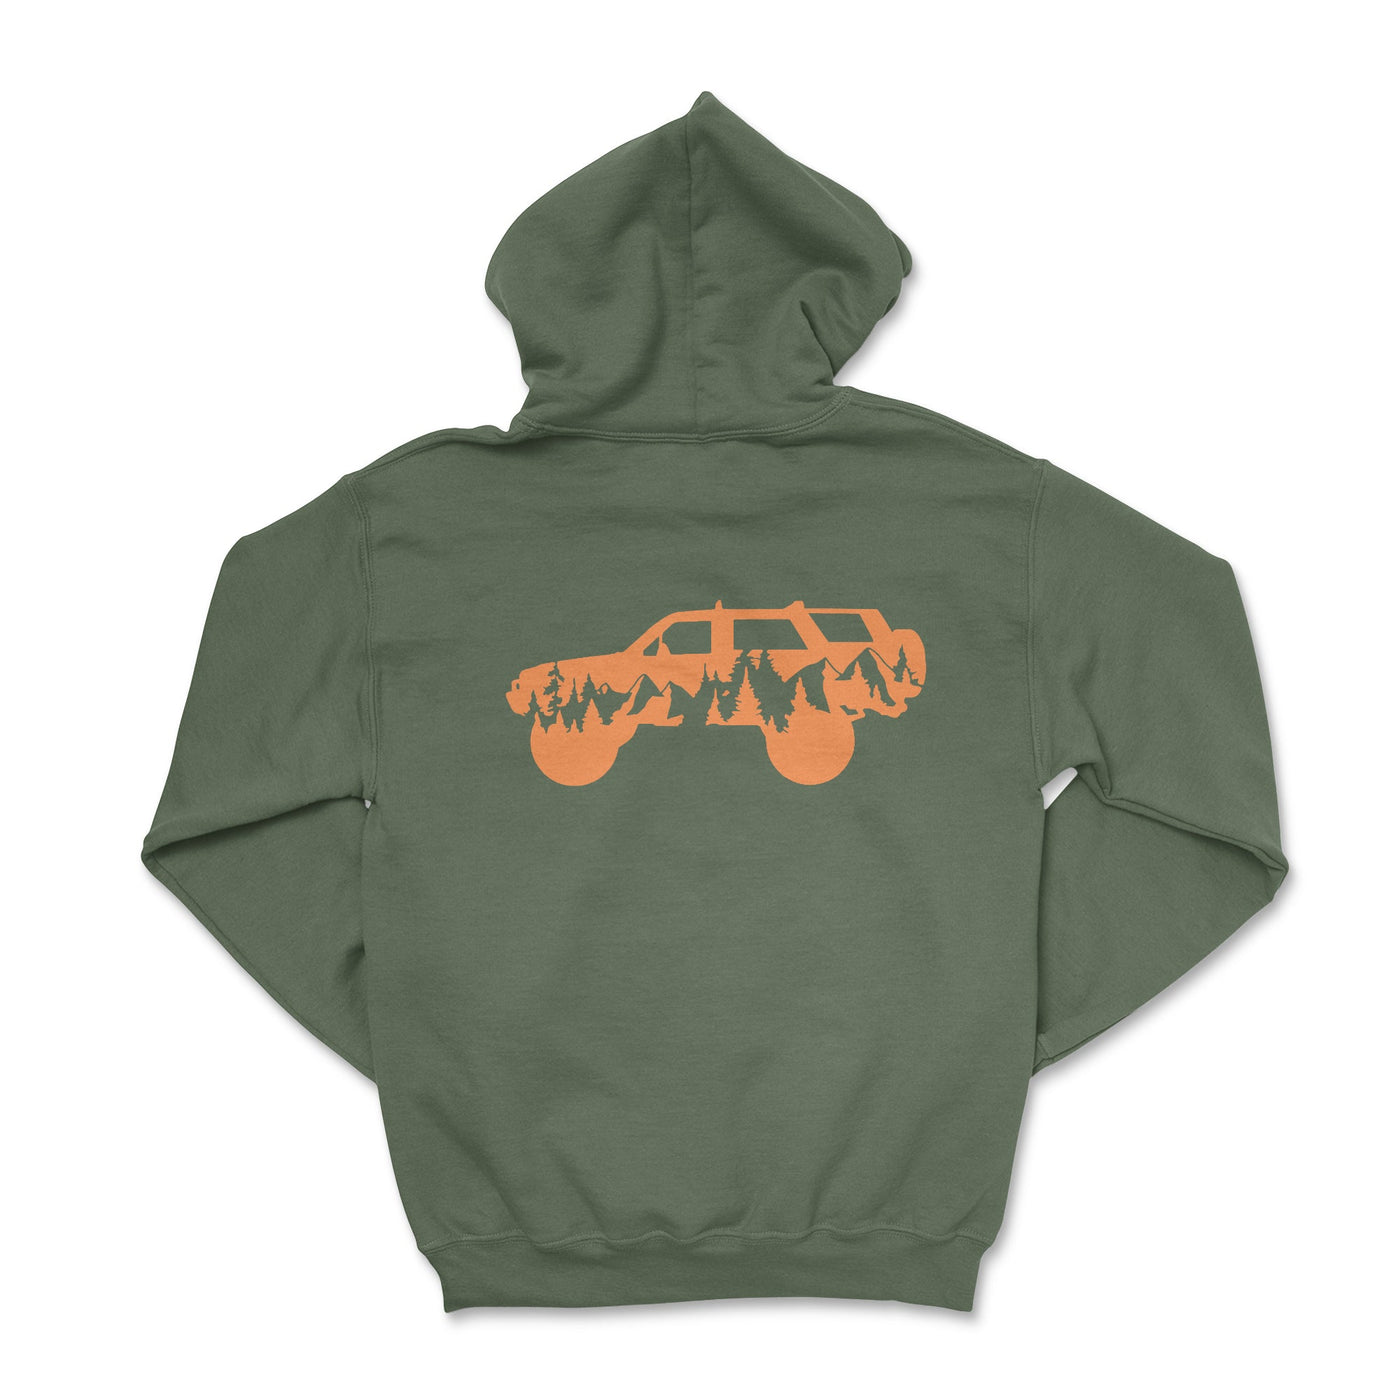 Orange 4Runner Hooded Sweatshirt - Goats Trail Off-Road Apparel Company